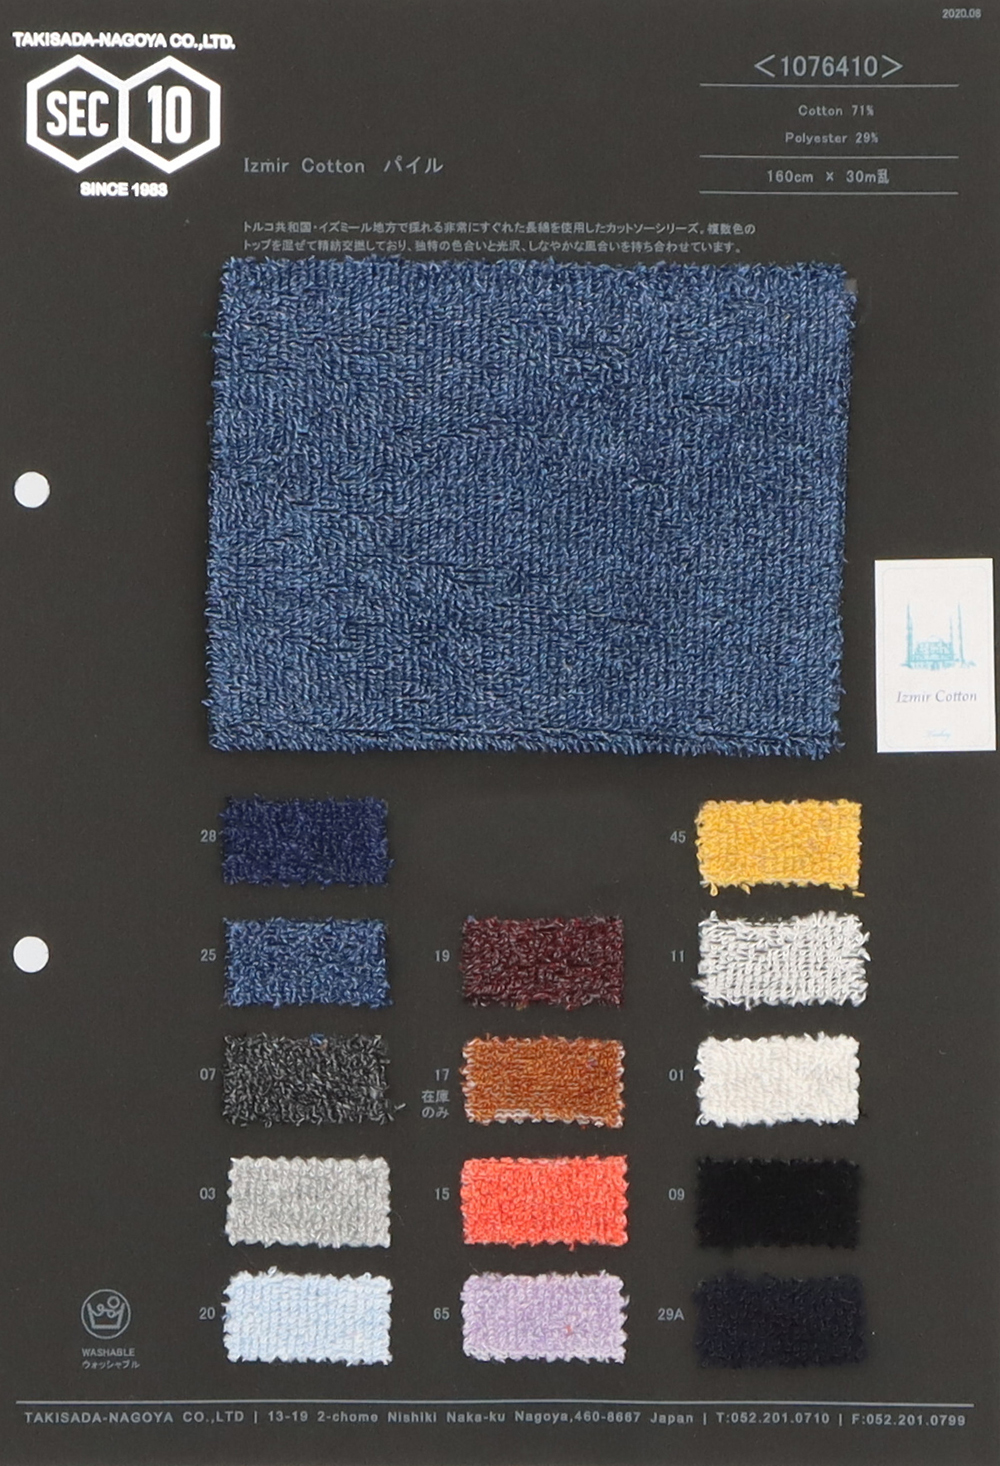 1076410 Jersey De Coton à Poils Longs Izmir[Fabrication De Textile] Takisada Nagoya